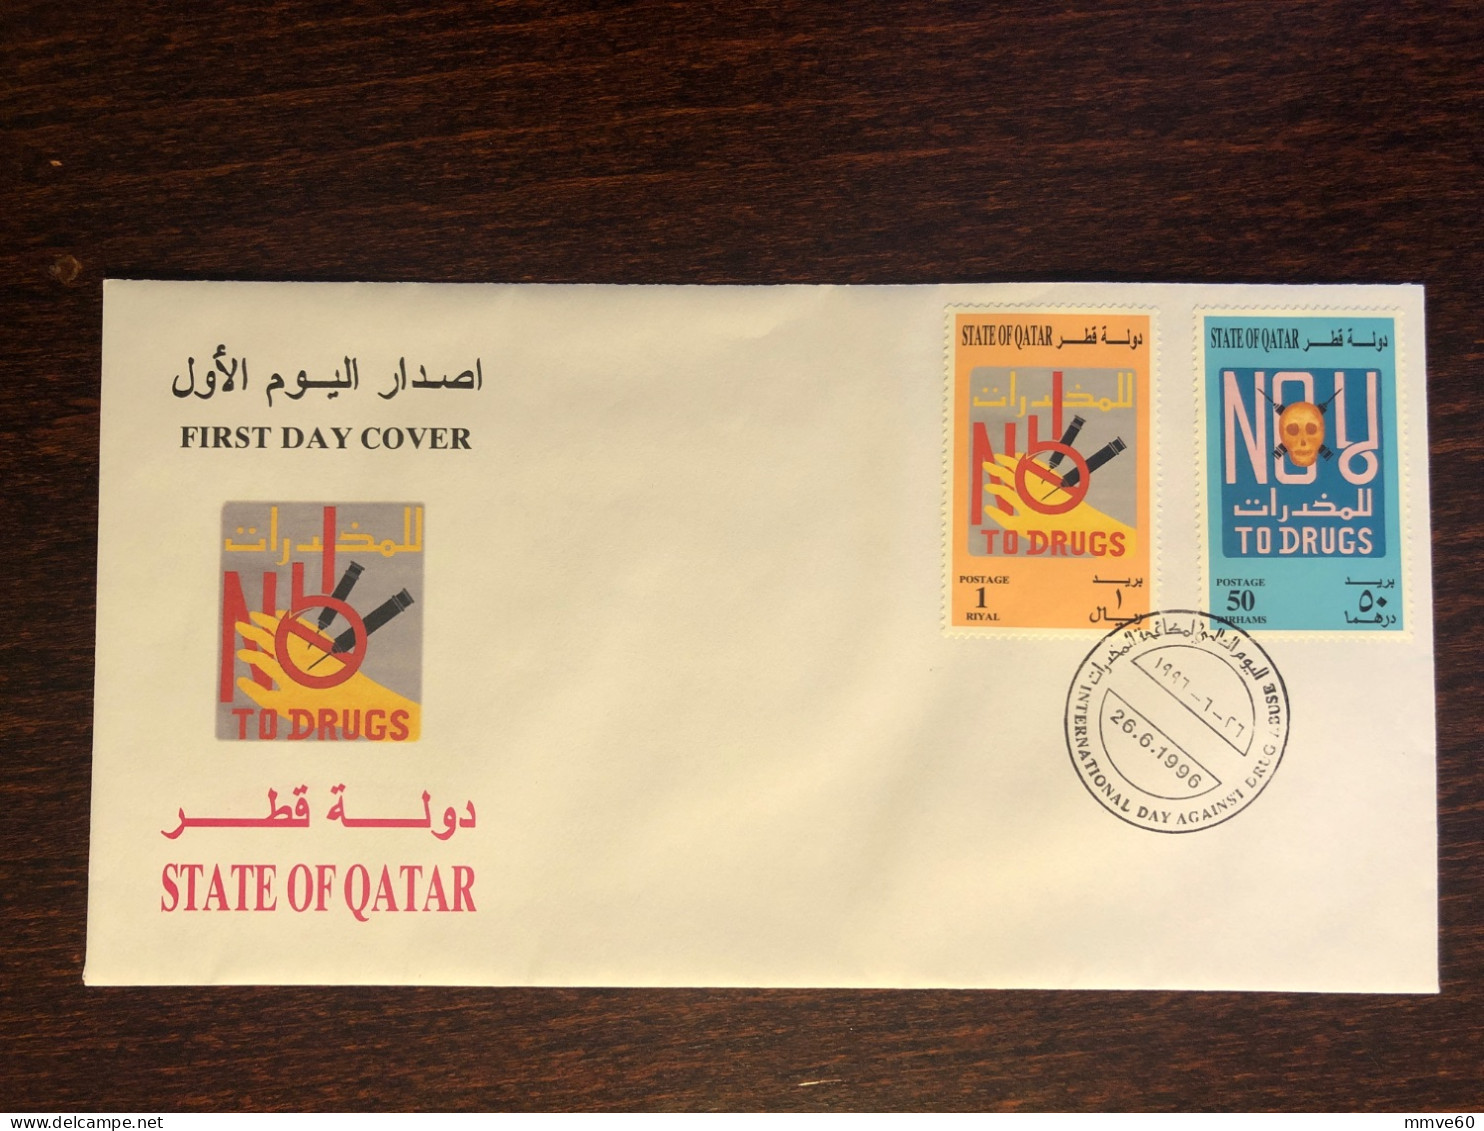 QATAR FDC COVER 1996 YEAR DRUGS NARCOTICS HEALTH MEDICINE STAMPS - Qatar